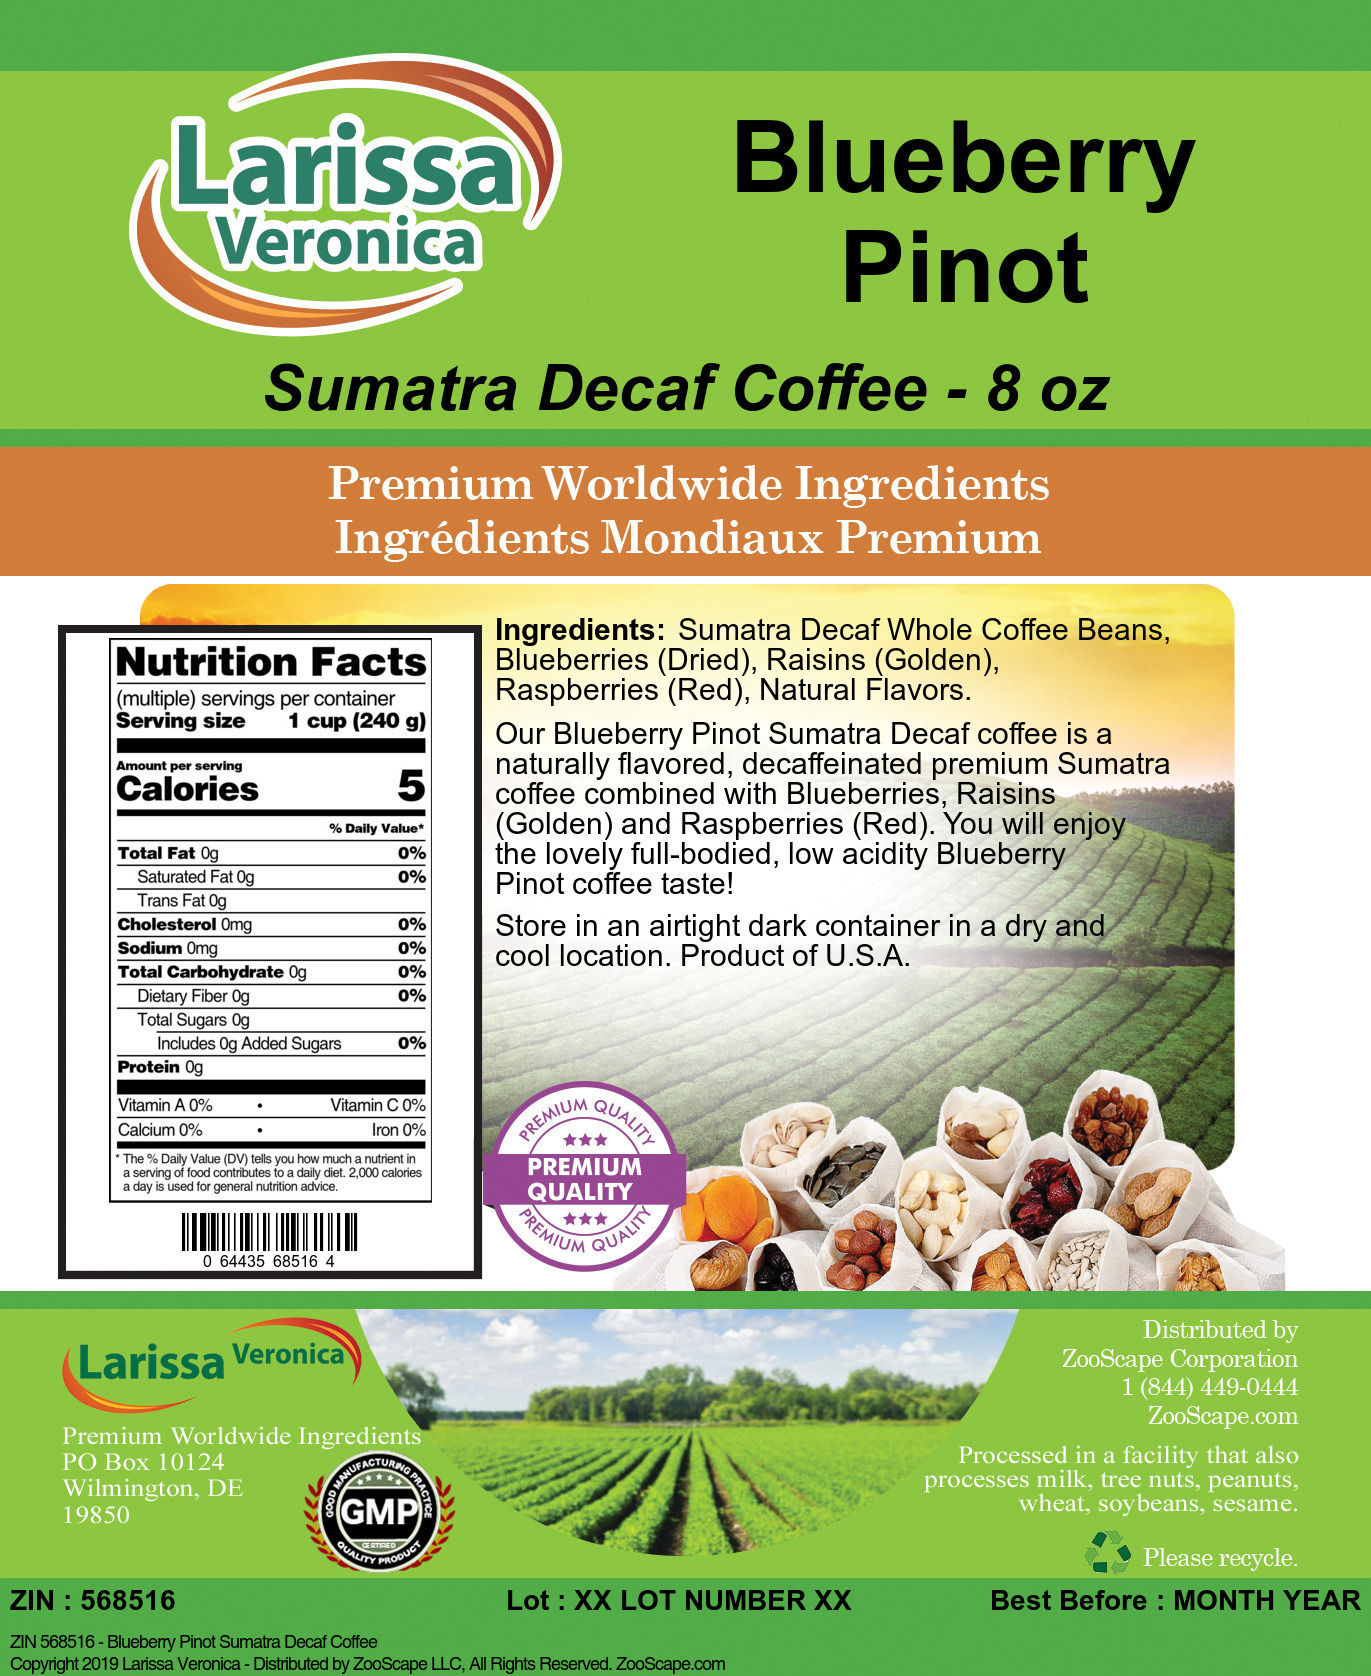 Blueberry Pinot Sumatra Decaf Coffee - Label